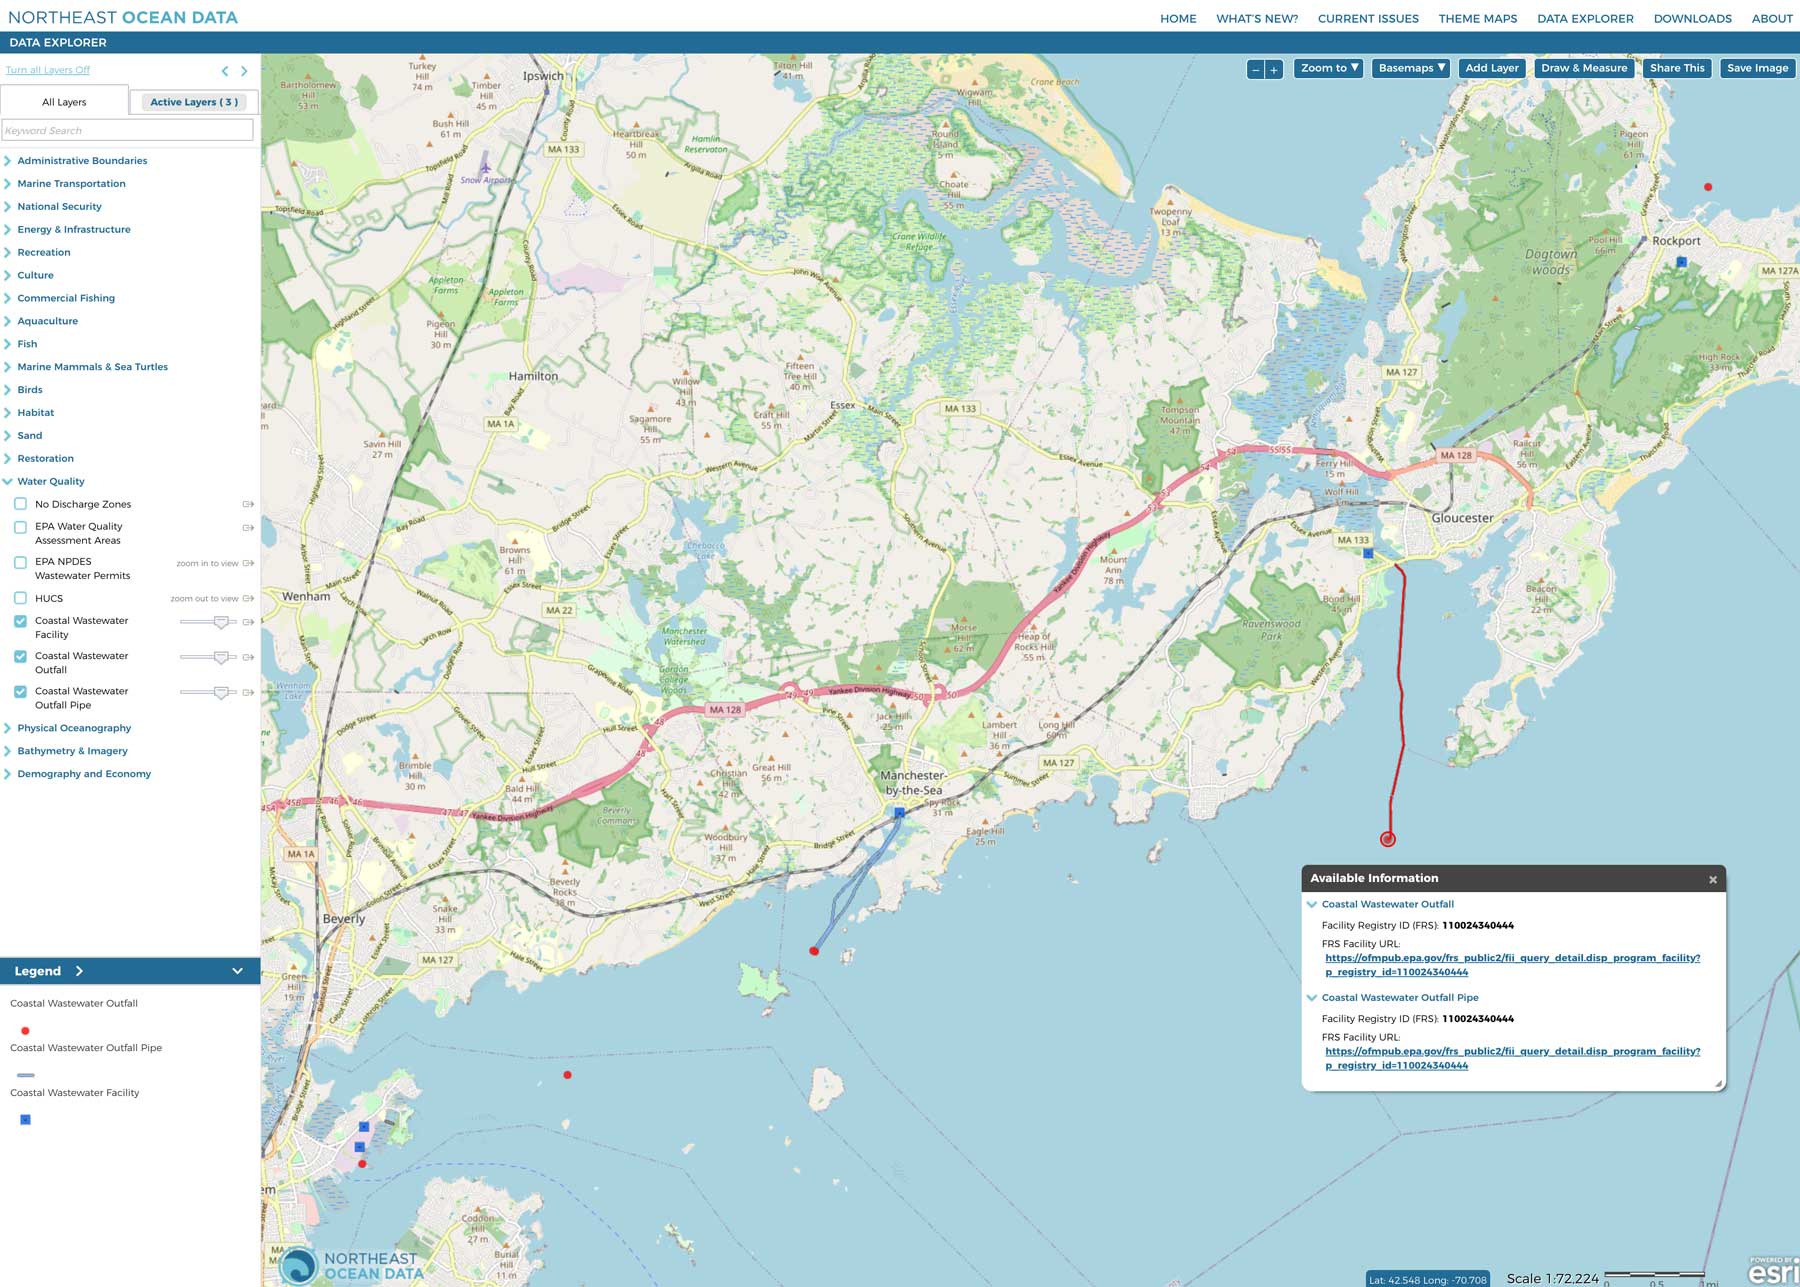 Screenshot of Data Explorer map